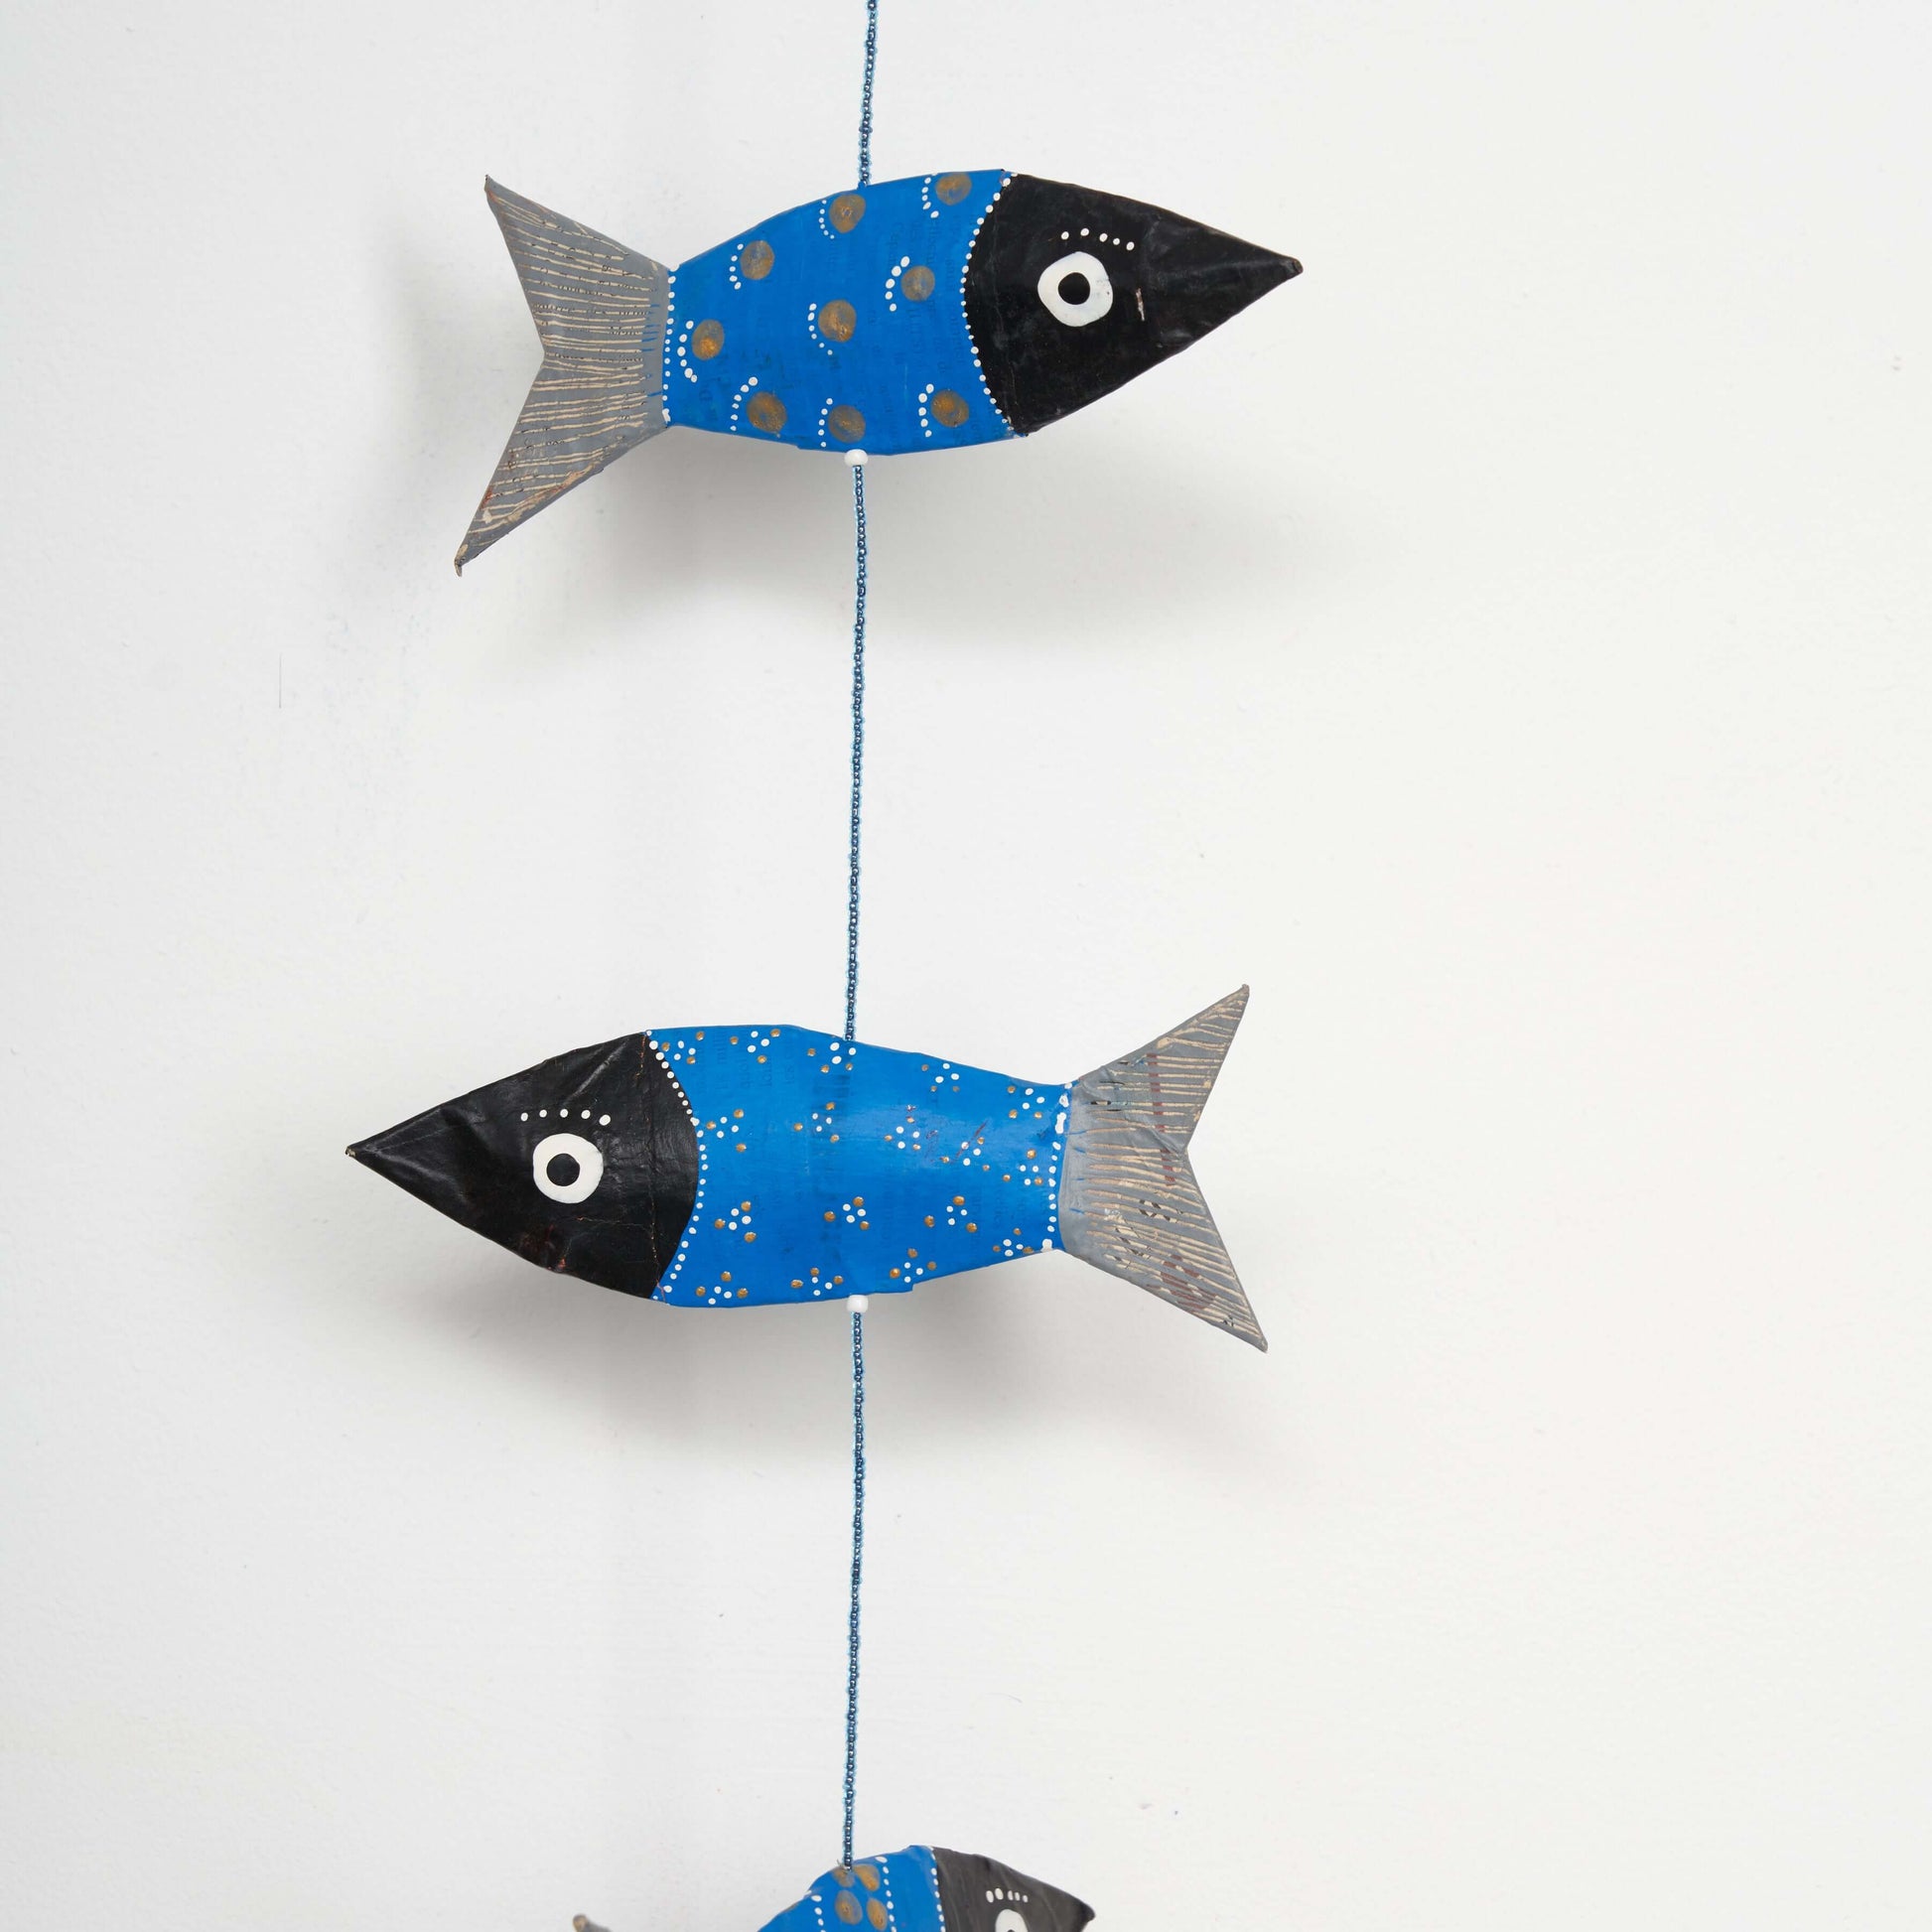 Girlande / Mobilé "Forelle" Fisch aus Pappmaché aus recyceltem Papier | Upcycling, handgemacht